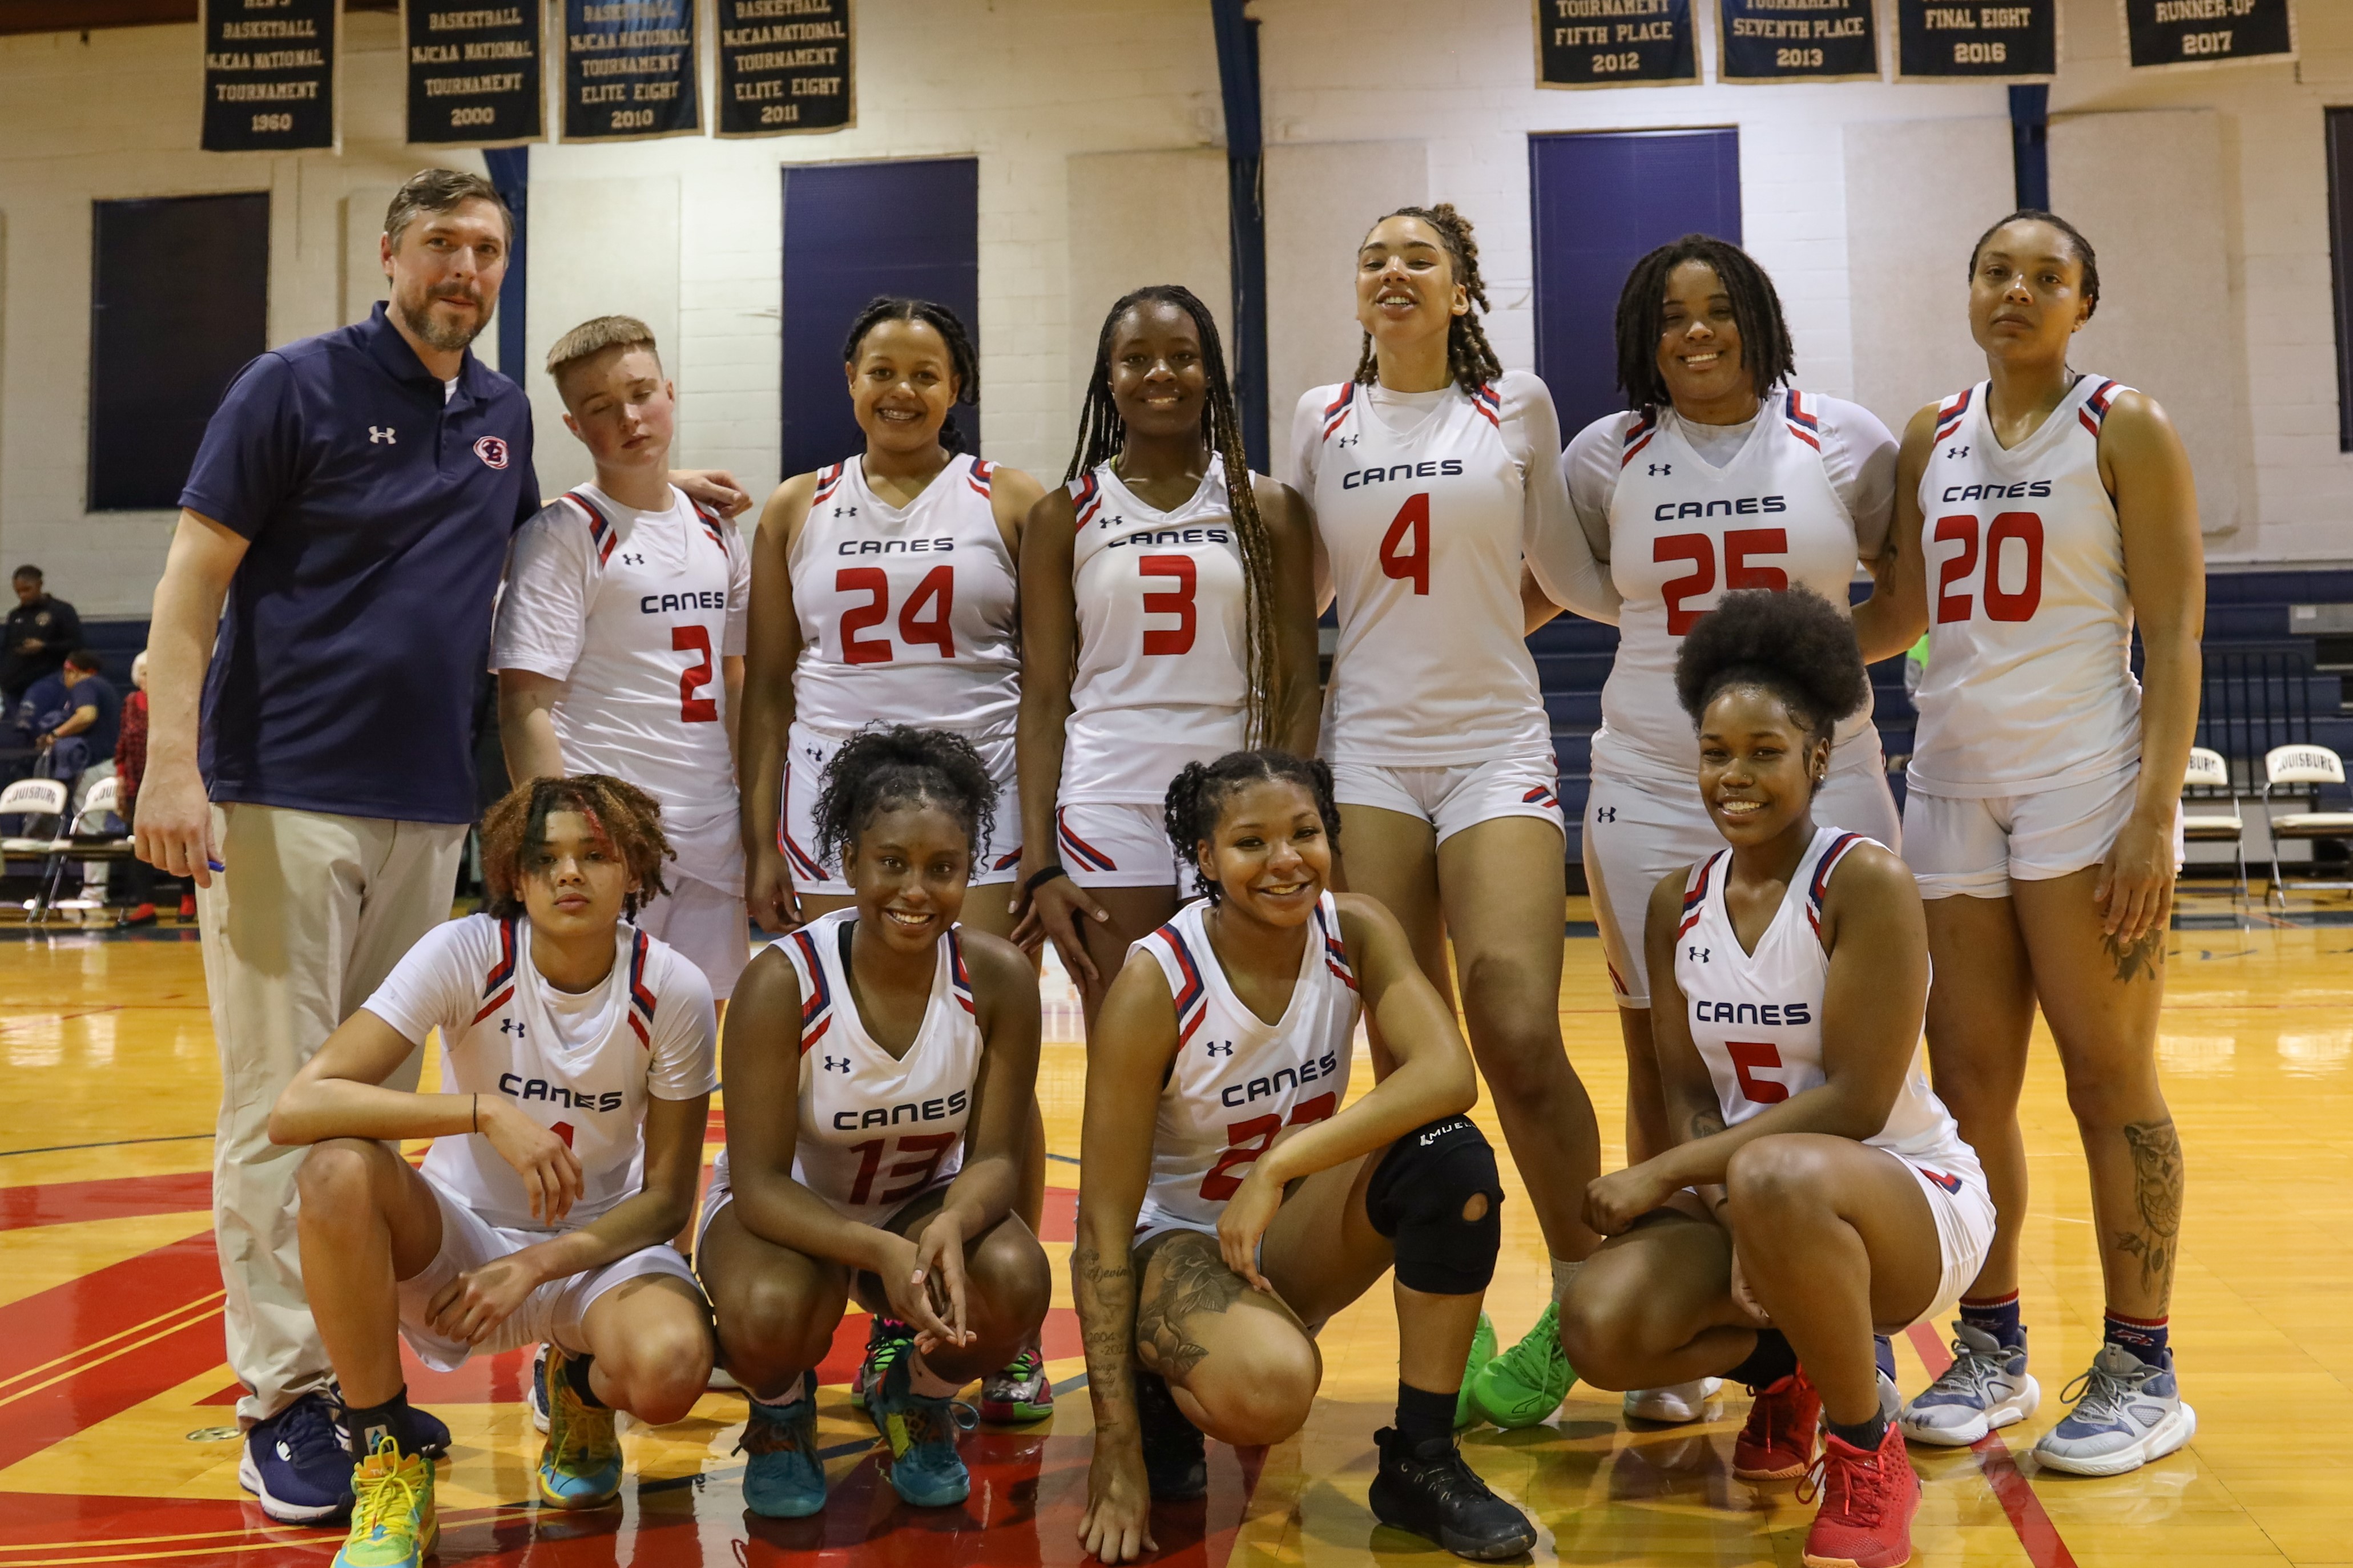 Women's basketball team with Coach Rasnake